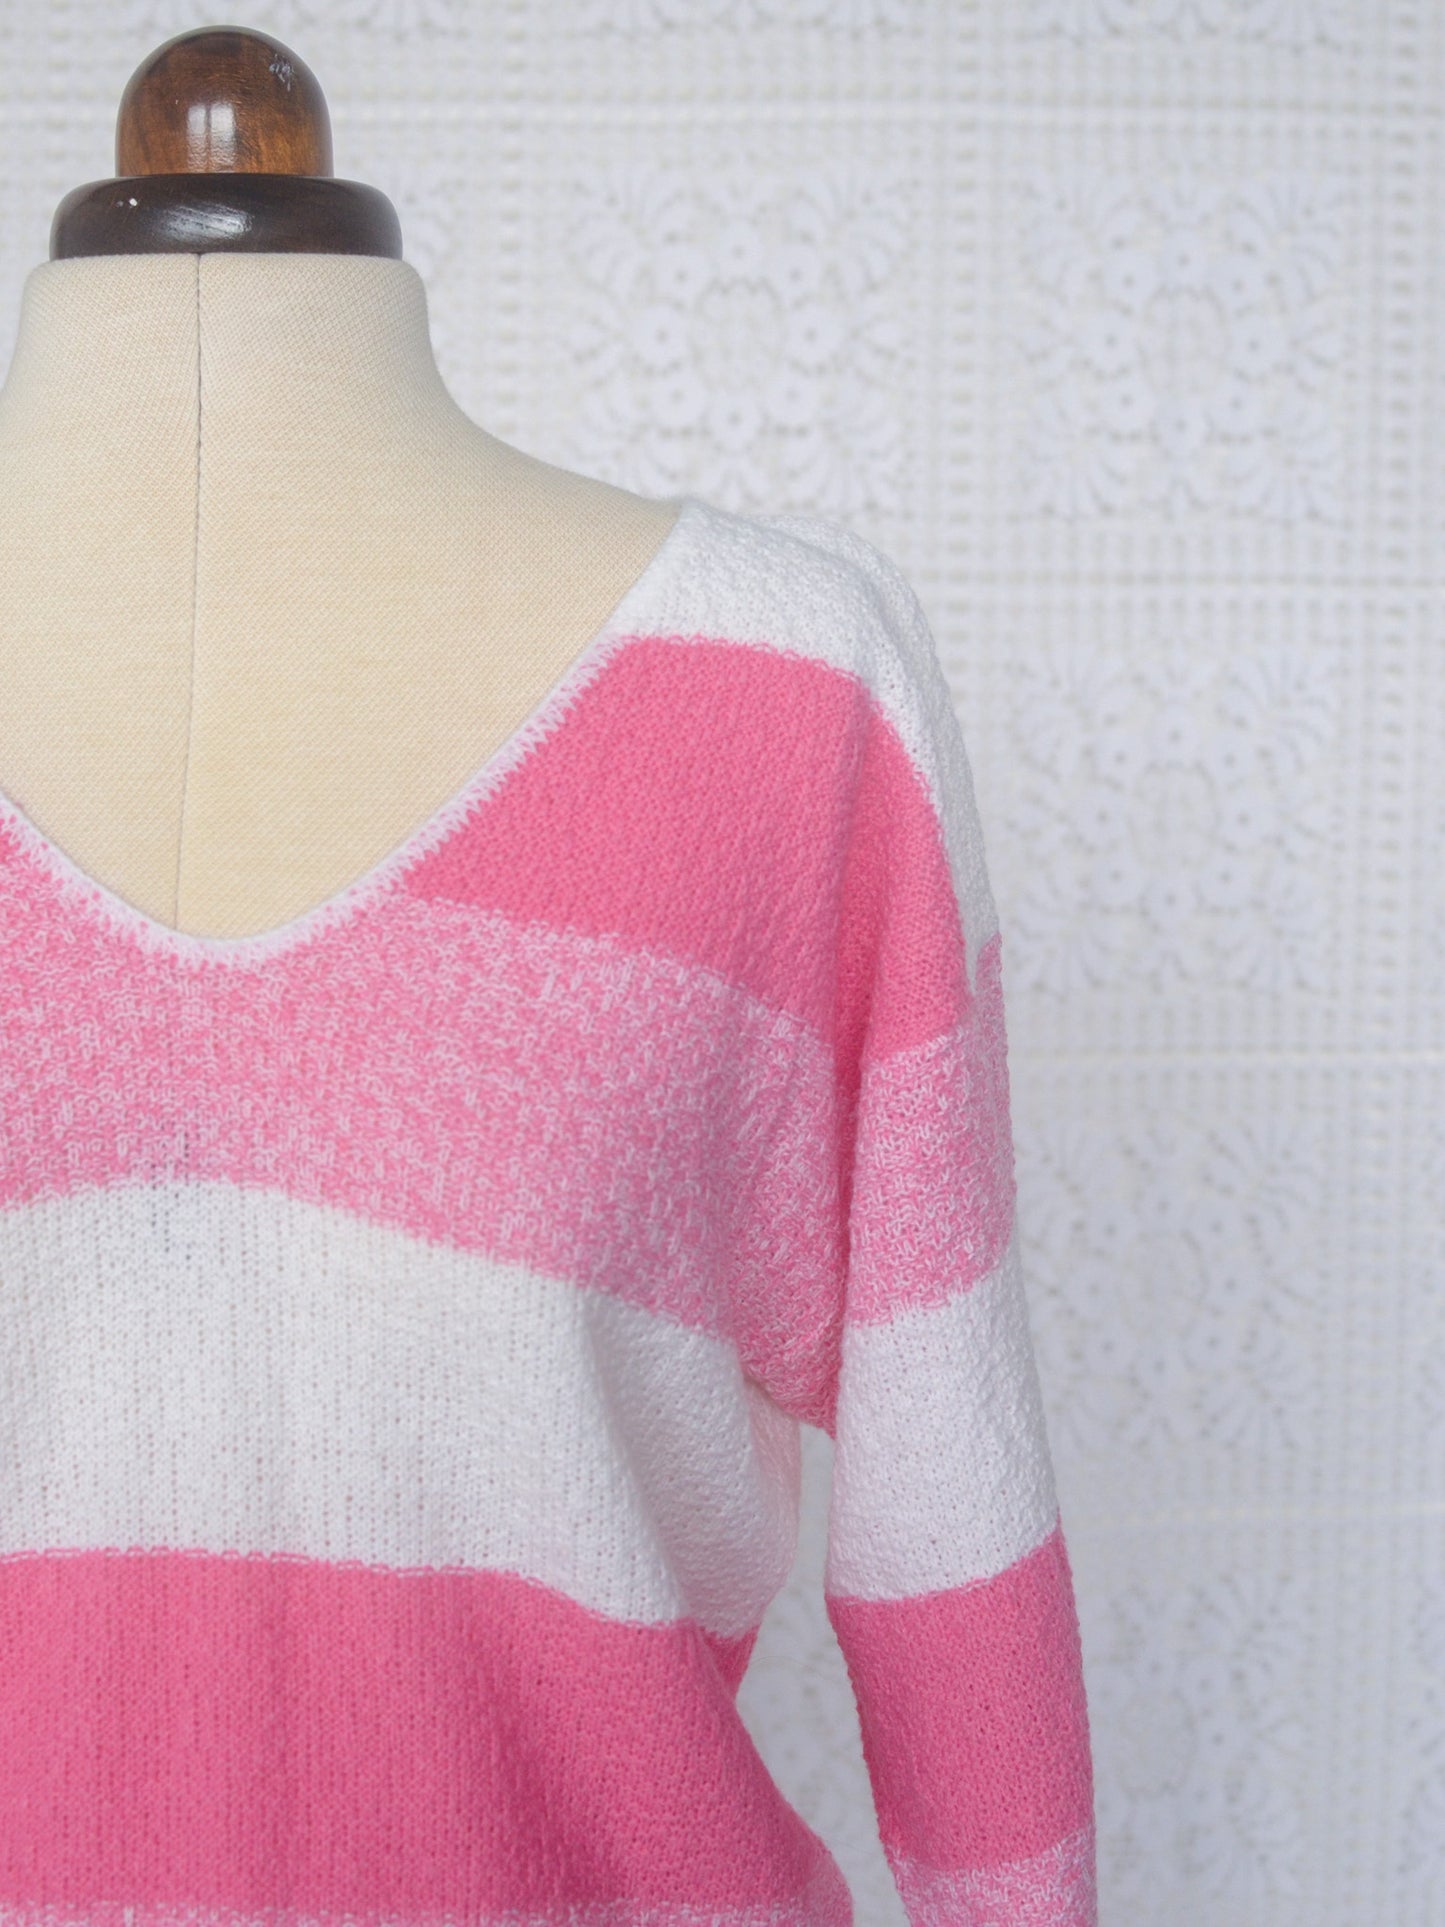 1980s style pink and white stripe v-neck jumper